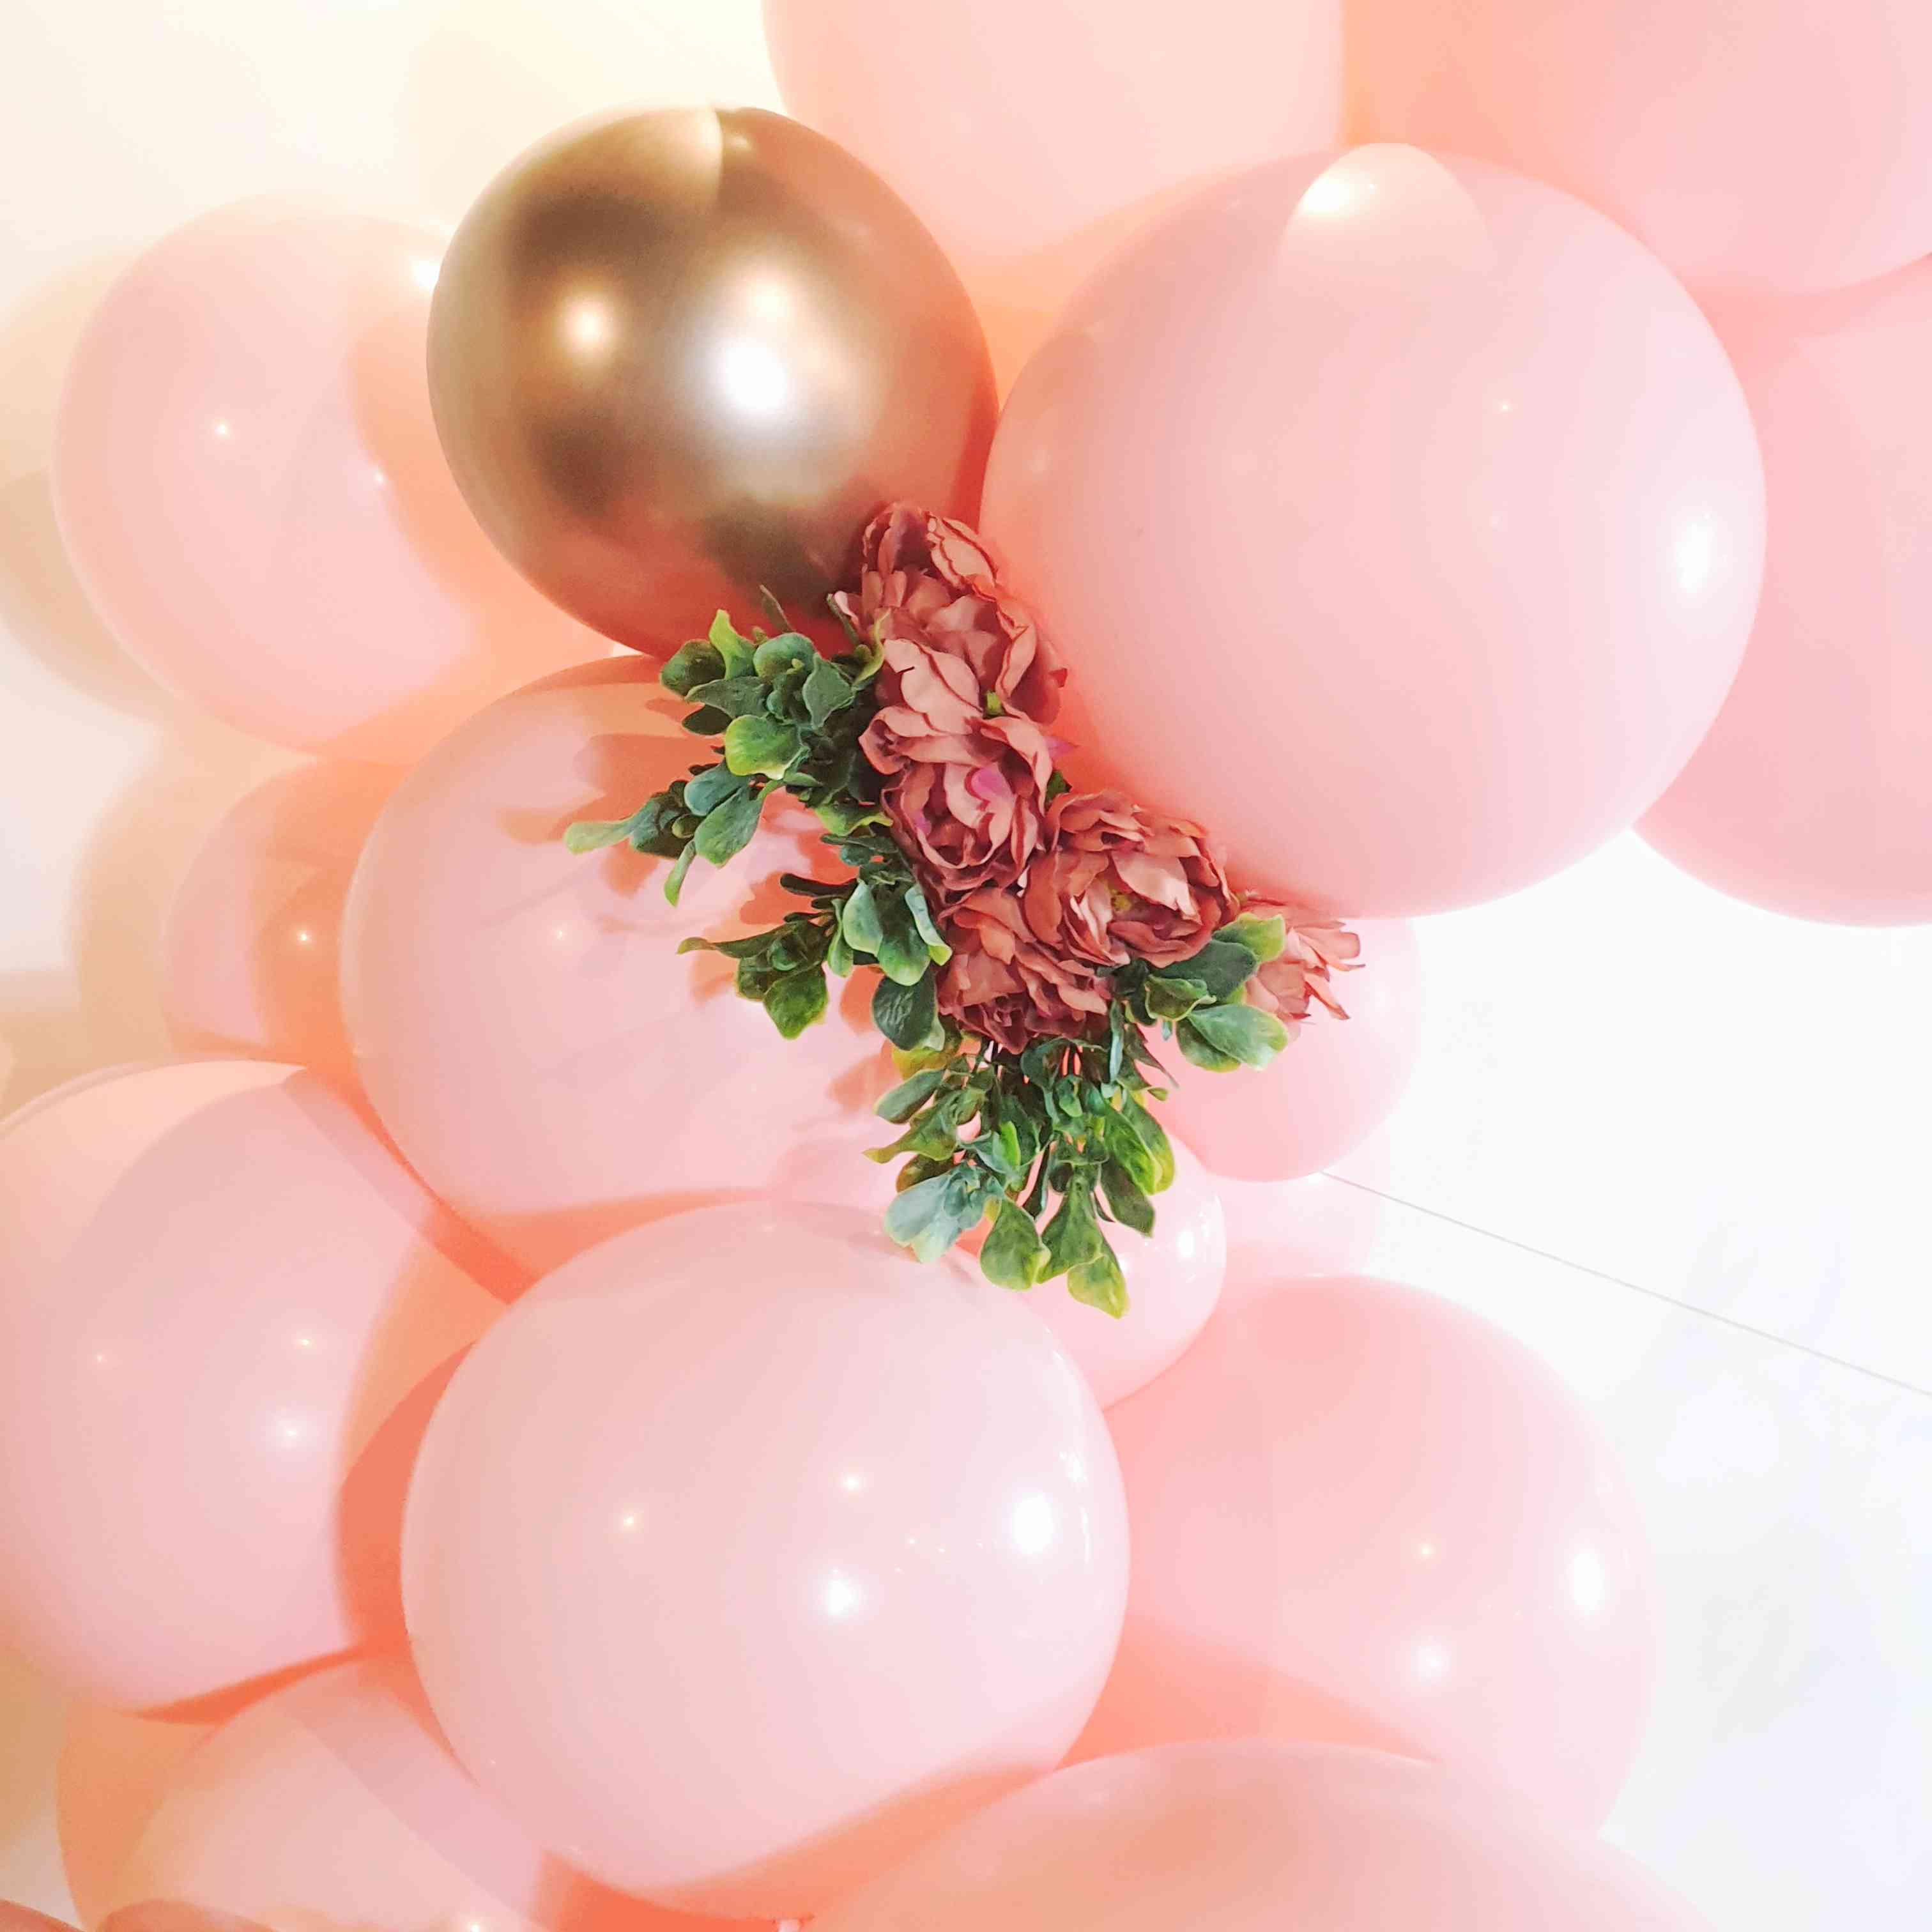 Ballon mylar fleuri Happy birthday - 35 cm